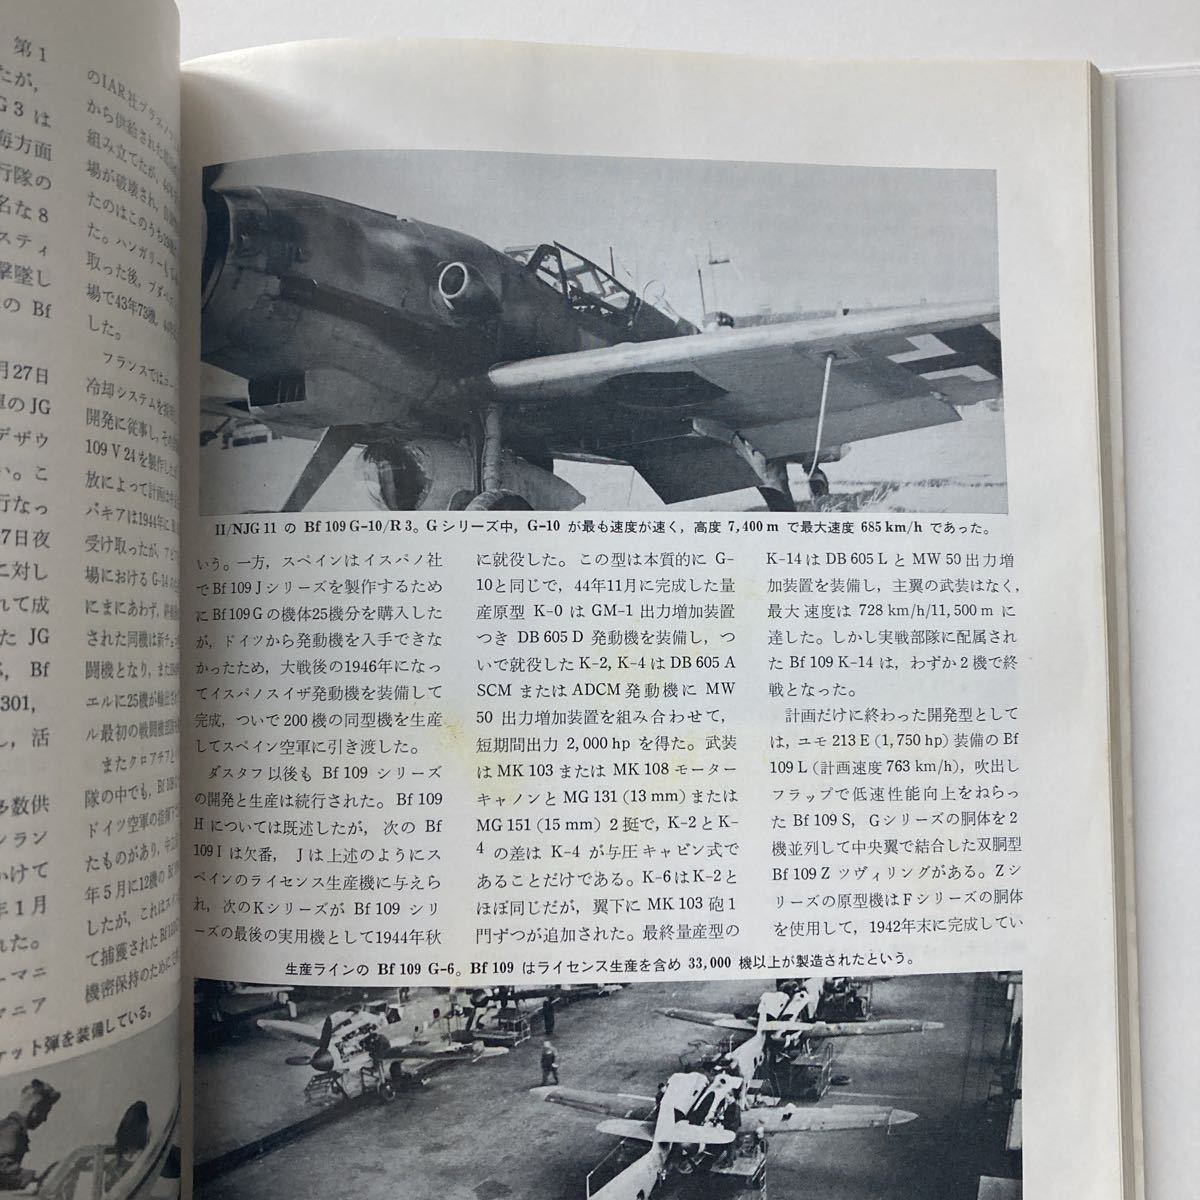 * aviation journal no. 2 next Germany fighter (aircraft) aladoba Hem Messerschmitt high nkeru Focke-Wulf 1980 year Showa era 55 year!G5